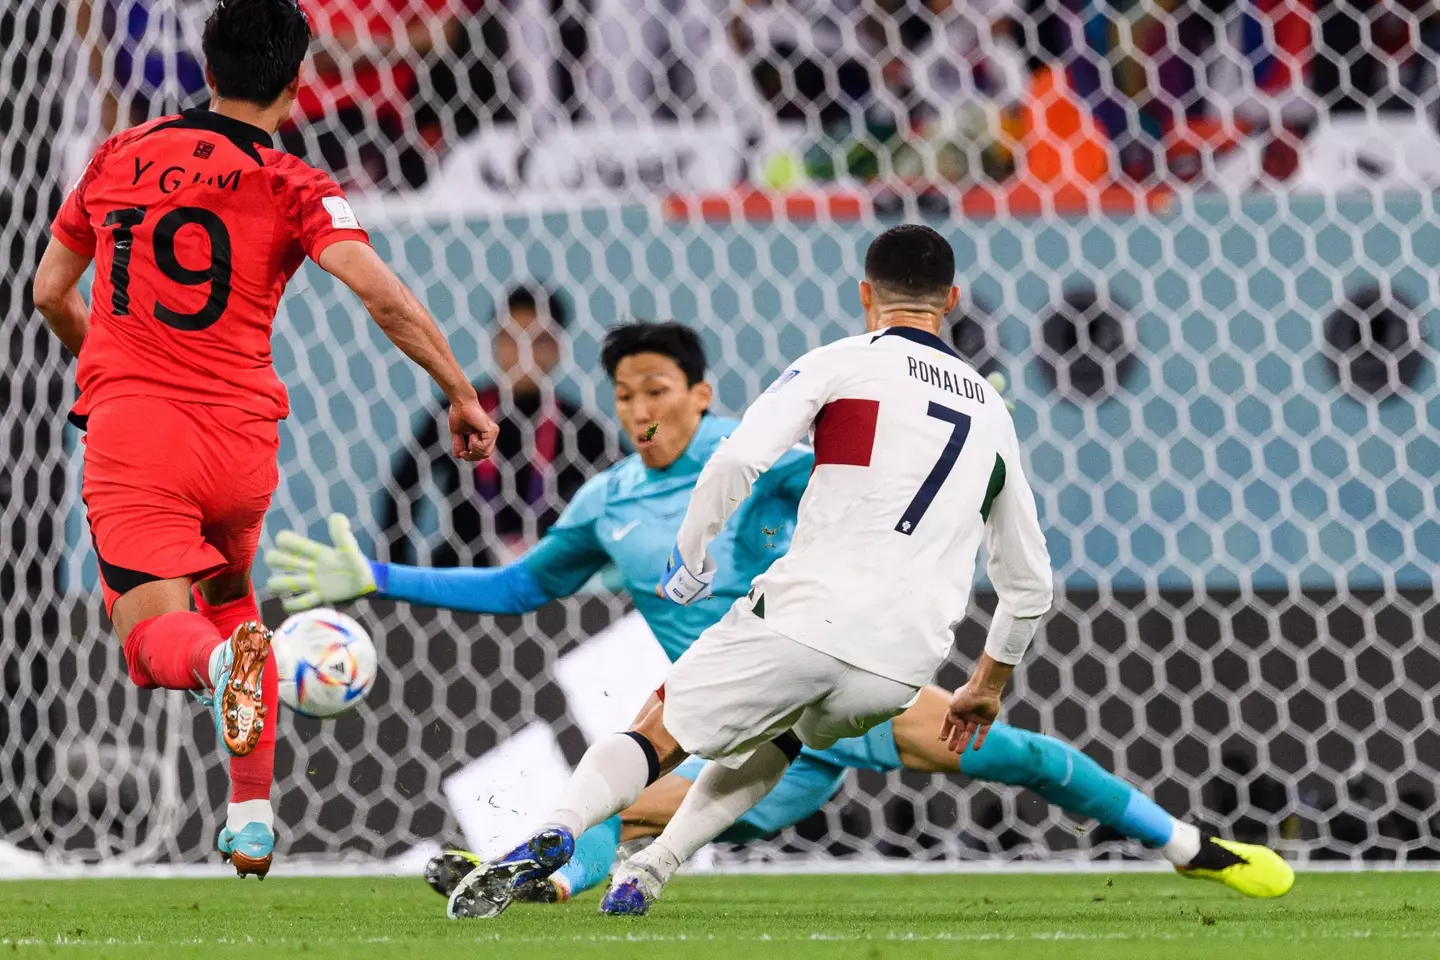 Ronaldo taking a shot against South Korea. (Image